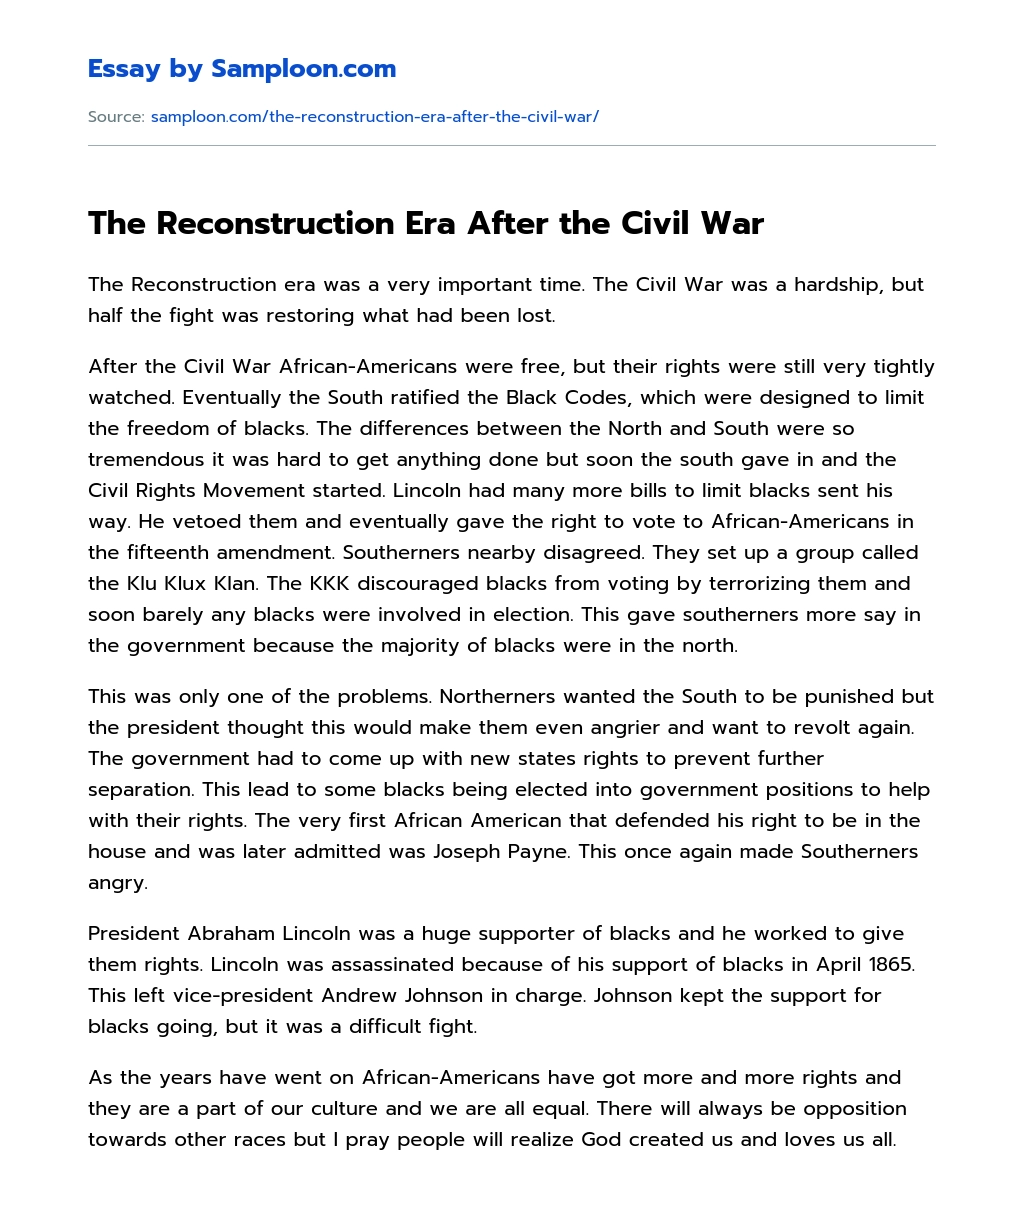 The Reconstruction Era After the Civil War essay